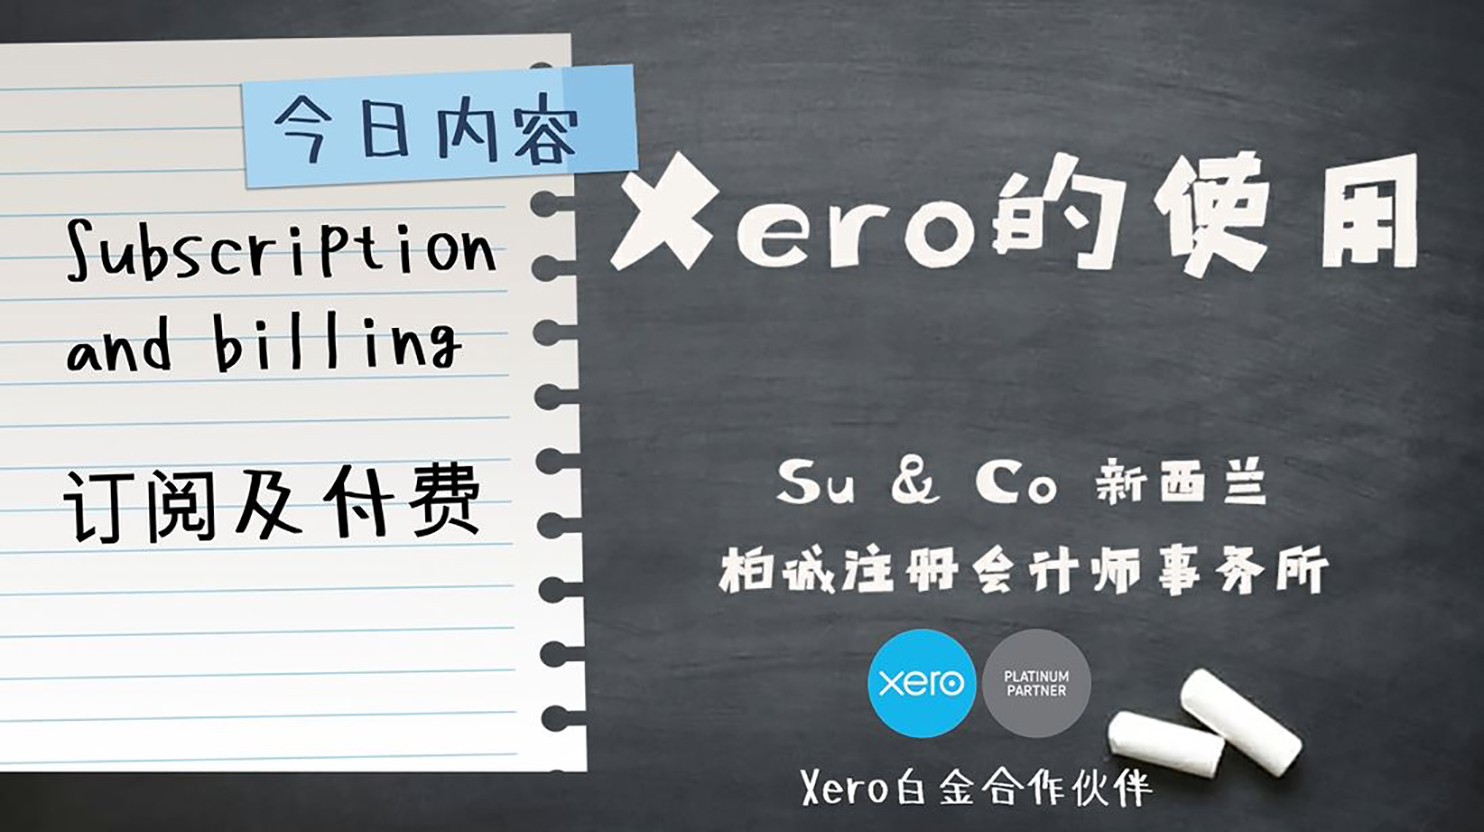 Xero的使用教程 - Subscription and billing 订阅及付费